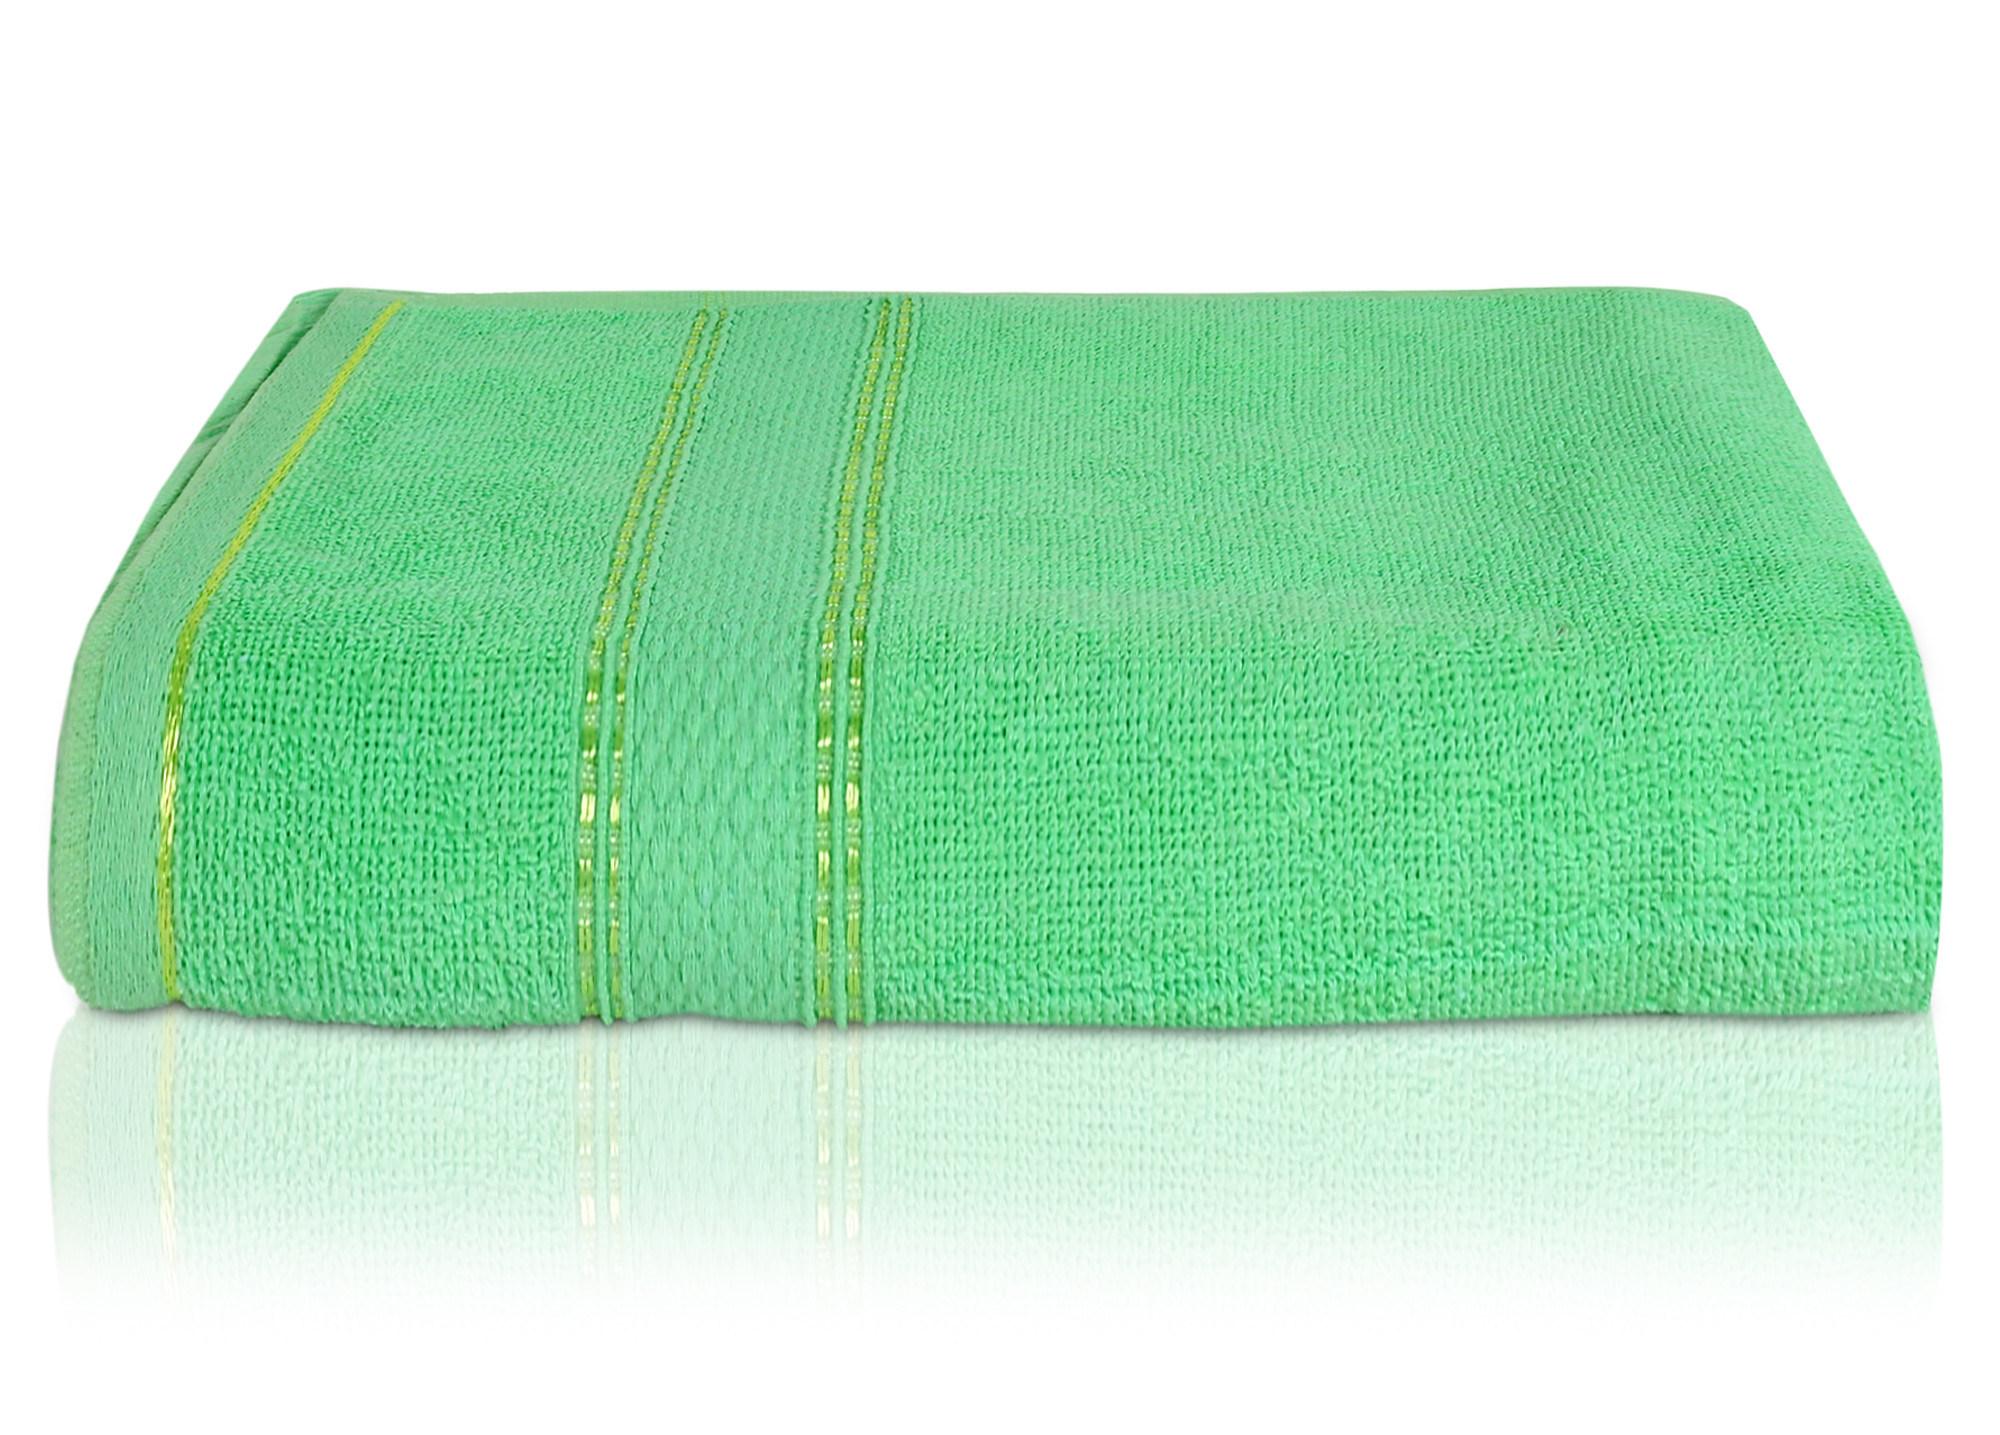 Kuber Industries Premium Design Luxurious, Soft Cotton Bath Towel With Check Border, 30